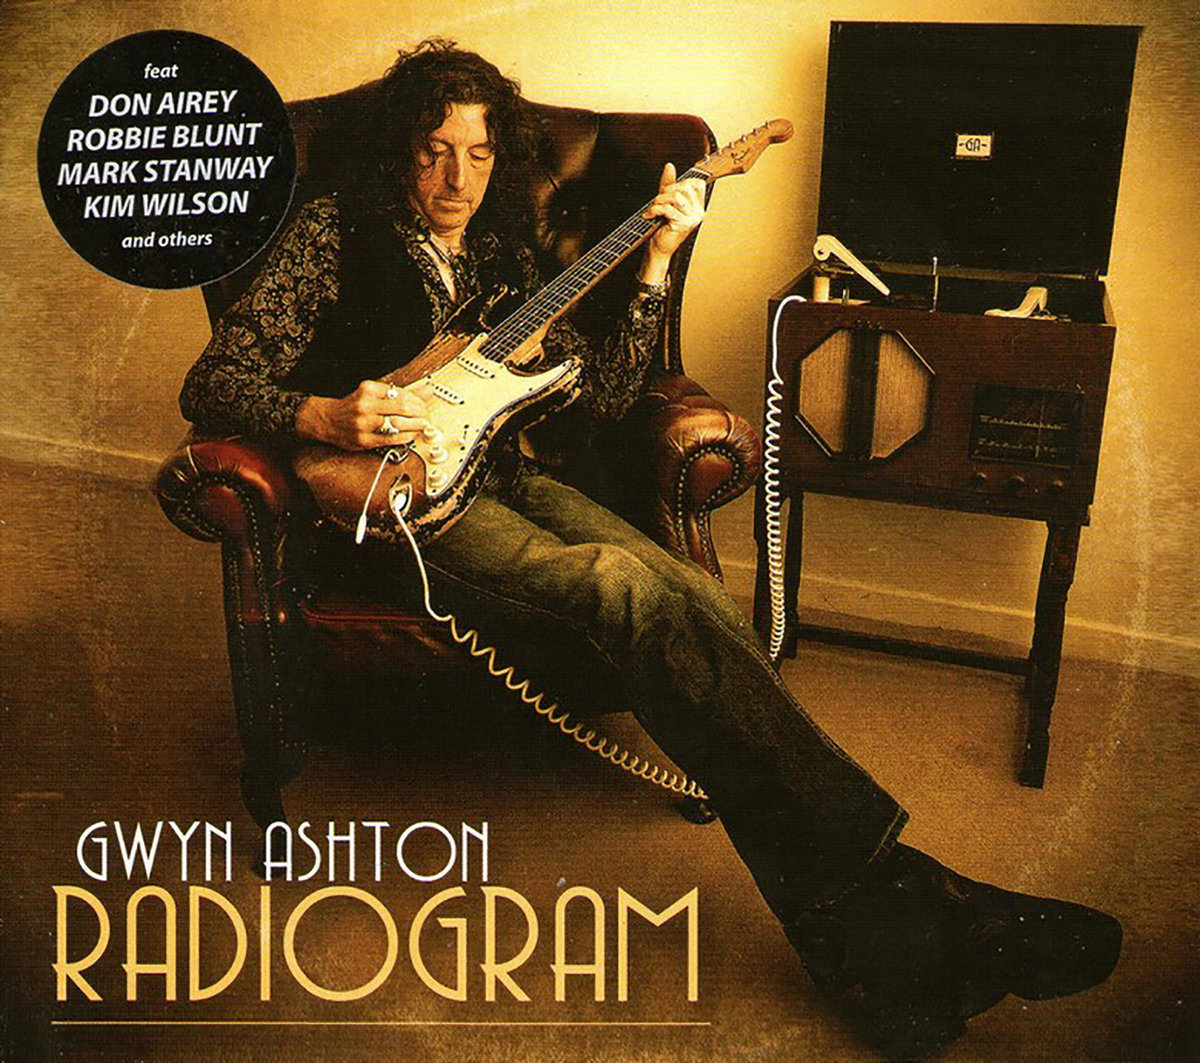 Archive – Album review: Gwyn Ashton – Radiogram